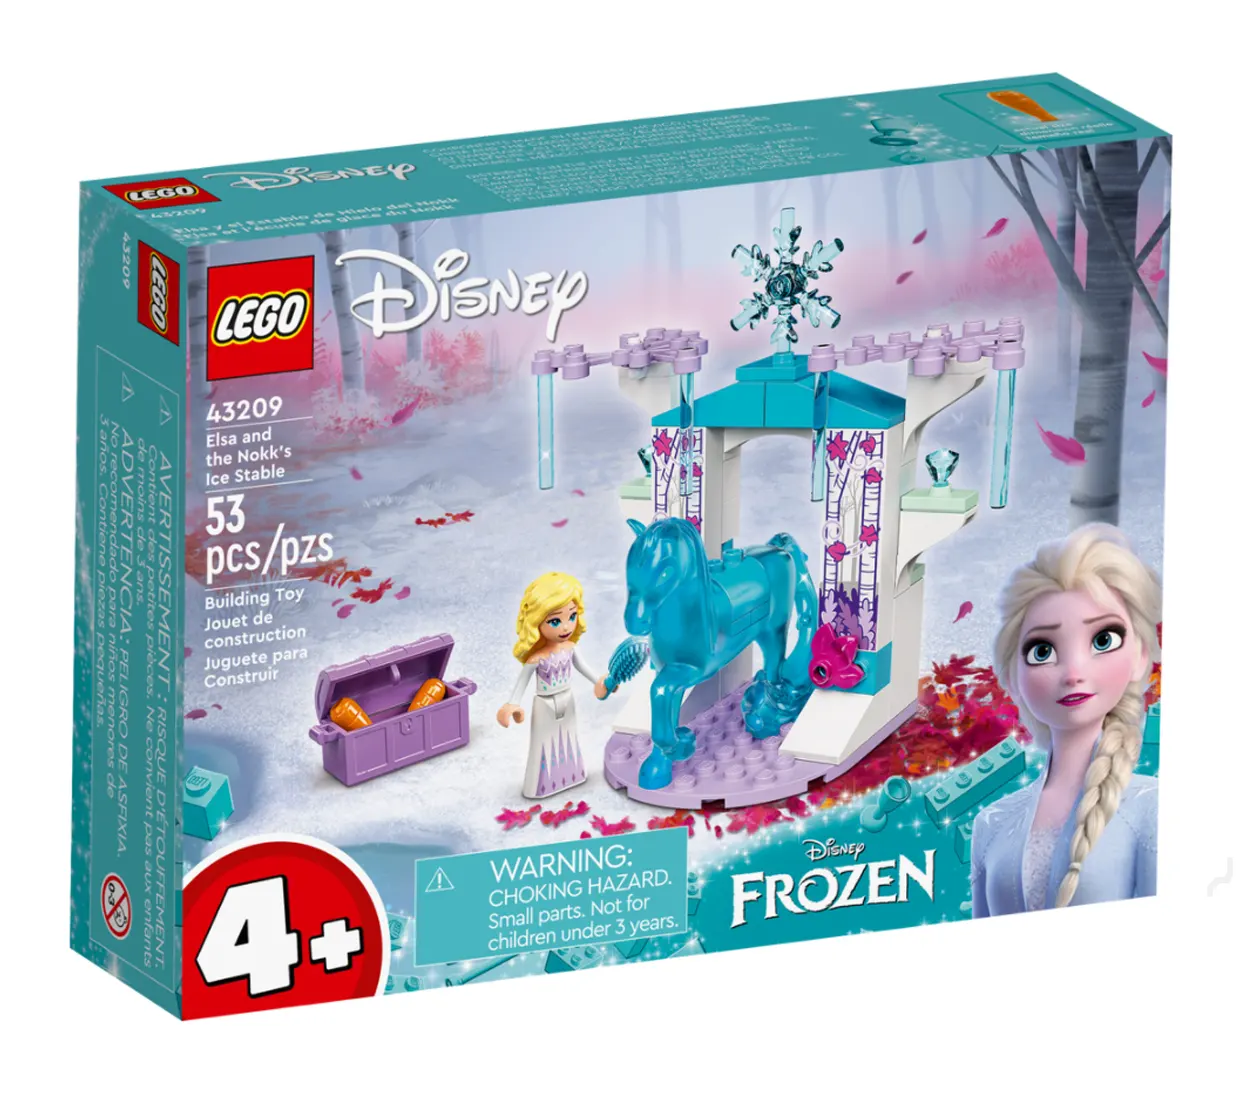 LEGO Disney Princess Elsa and the Nokk’s Ice Stable 43209